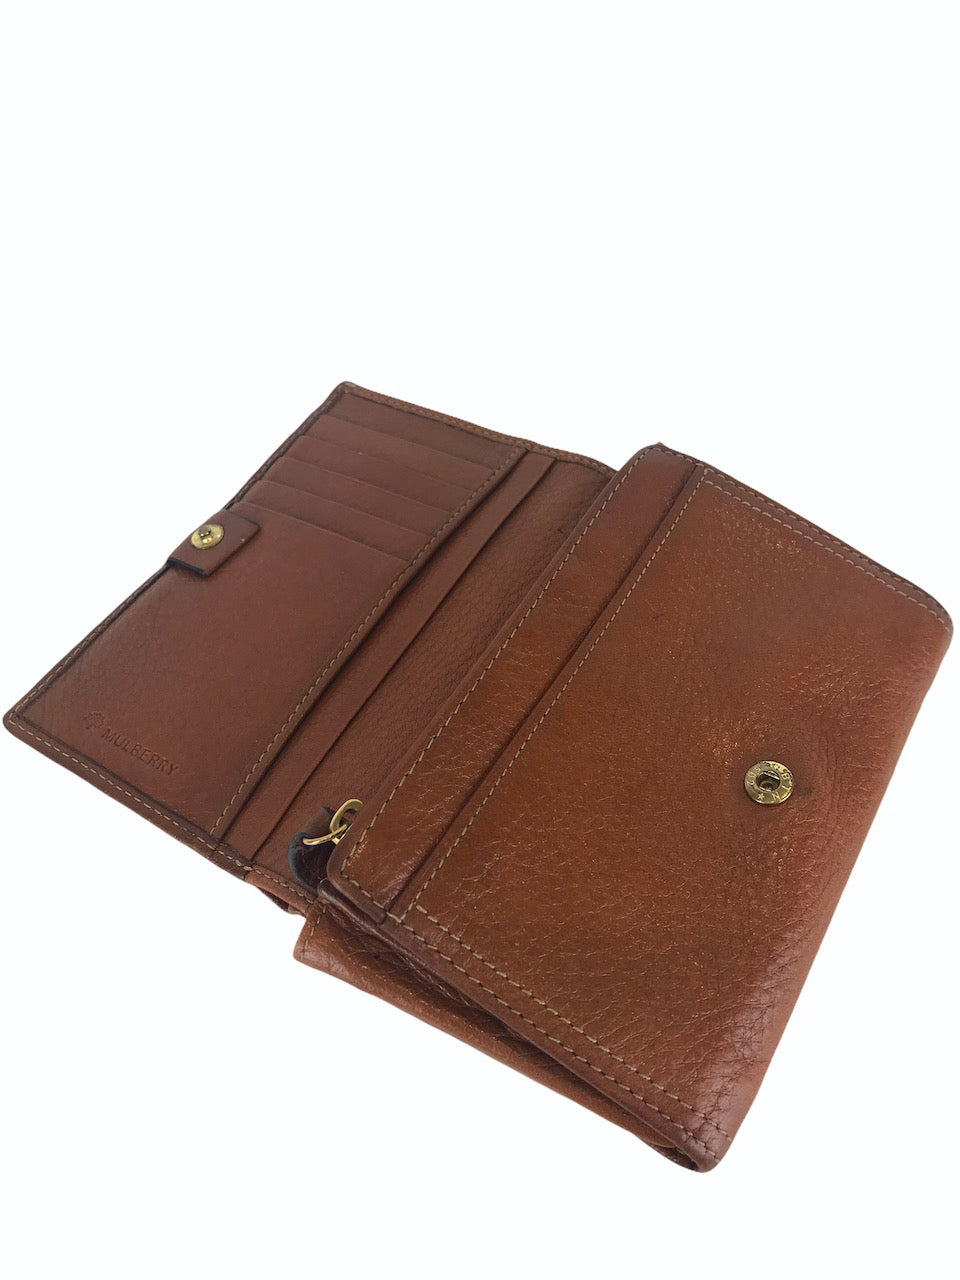 Mulberry Oak Leather Wallet  - As Seen On Instagram 09/09/2020 - Siopaella Designer Exchange